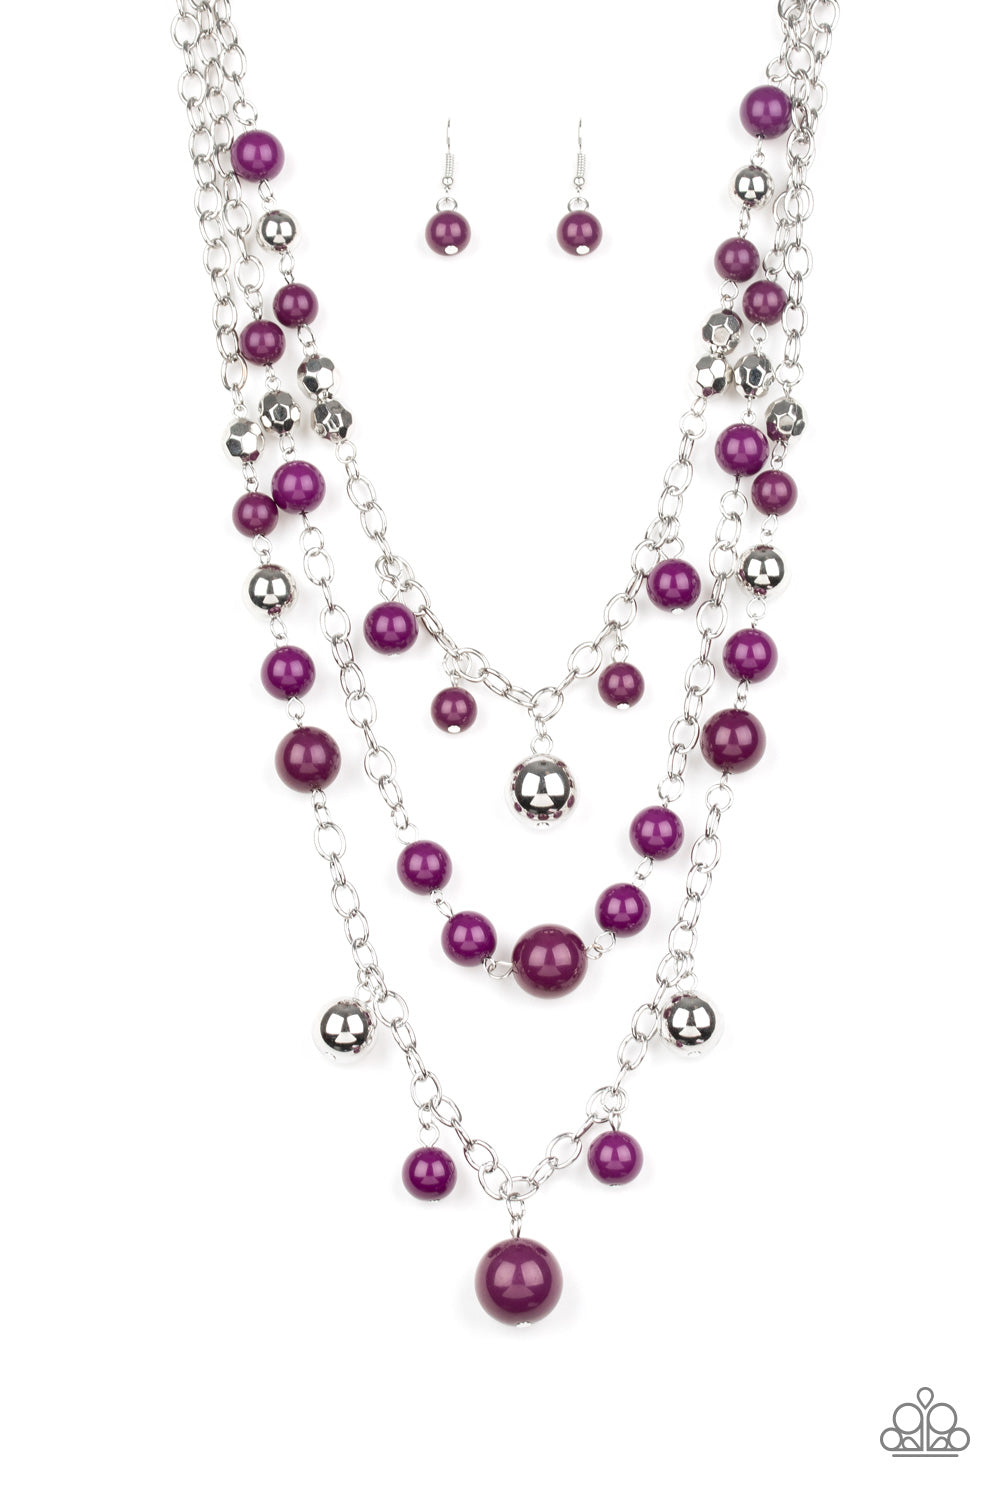 The Partygoer Purple Paparazzi Necklaces Cashmere Pink Jewels - Cashmere Pink Jewels & Accessories, Cashmere Pink Jewels & Accessories - Paparazzi